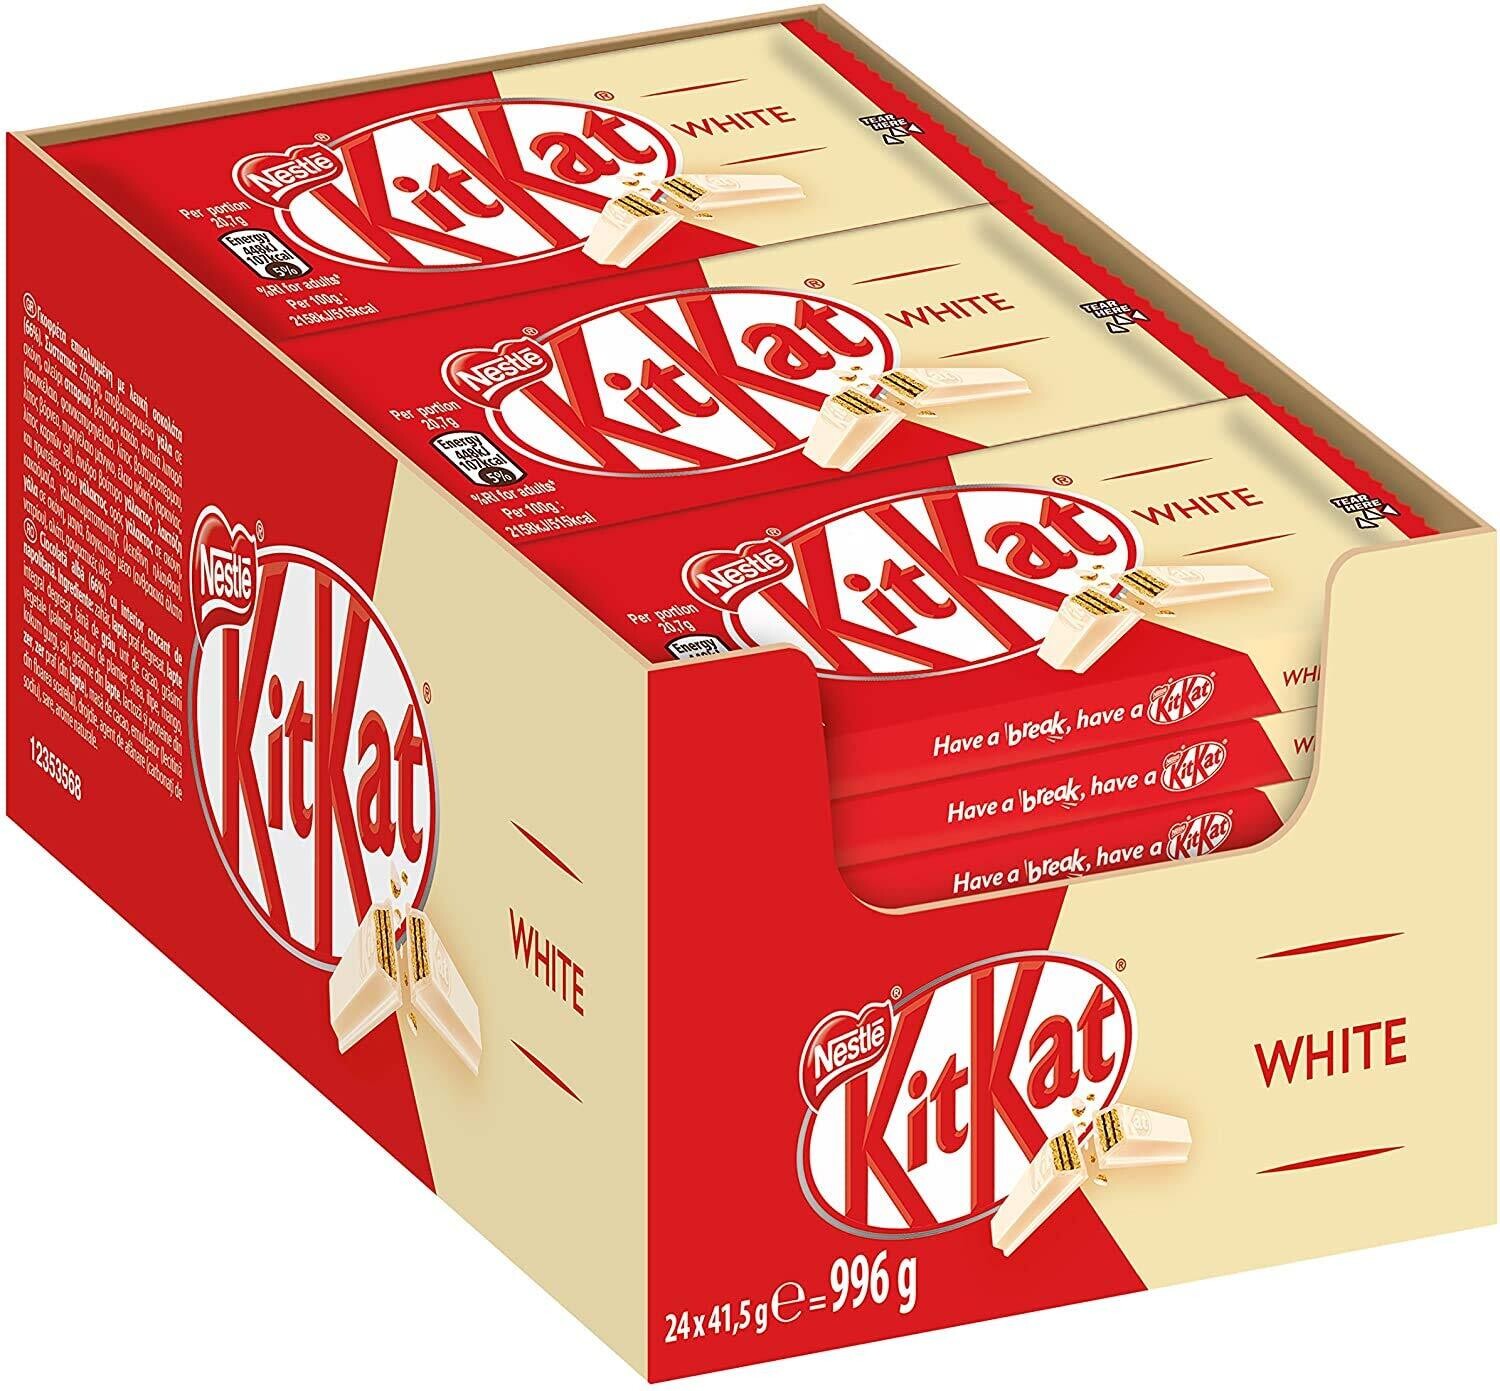 Nestle KIT KAT White 24 Bars x 41.5g Box 996g | Imported